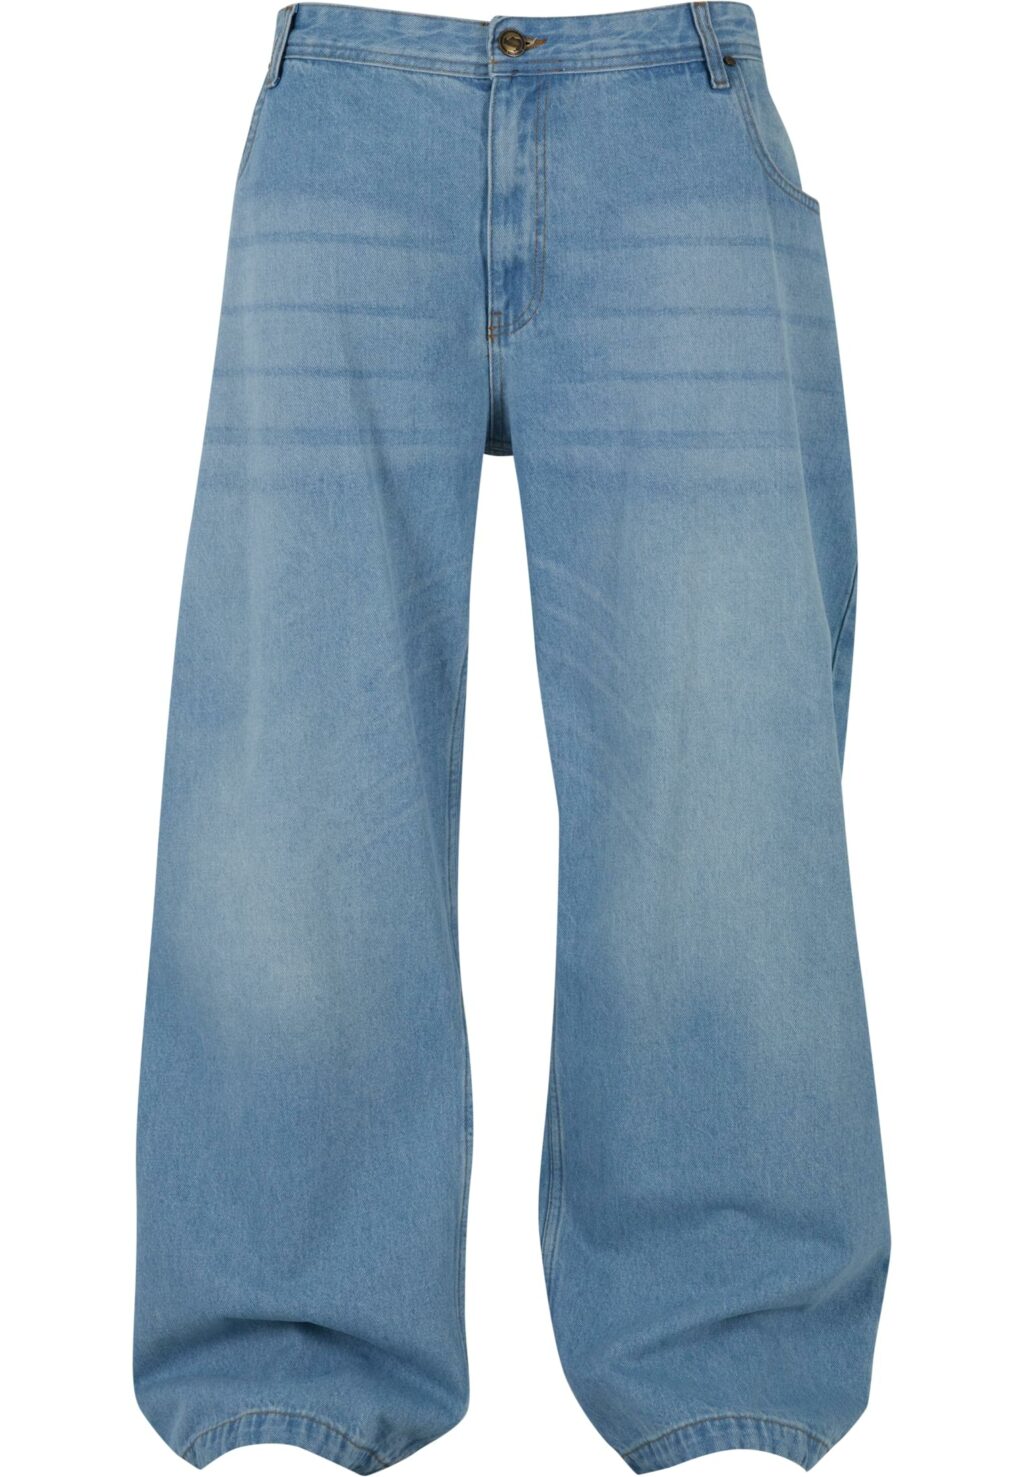 Ecko Unltd. Hang Loose Fit Jeans light blue denim W38 ECKOJS1002